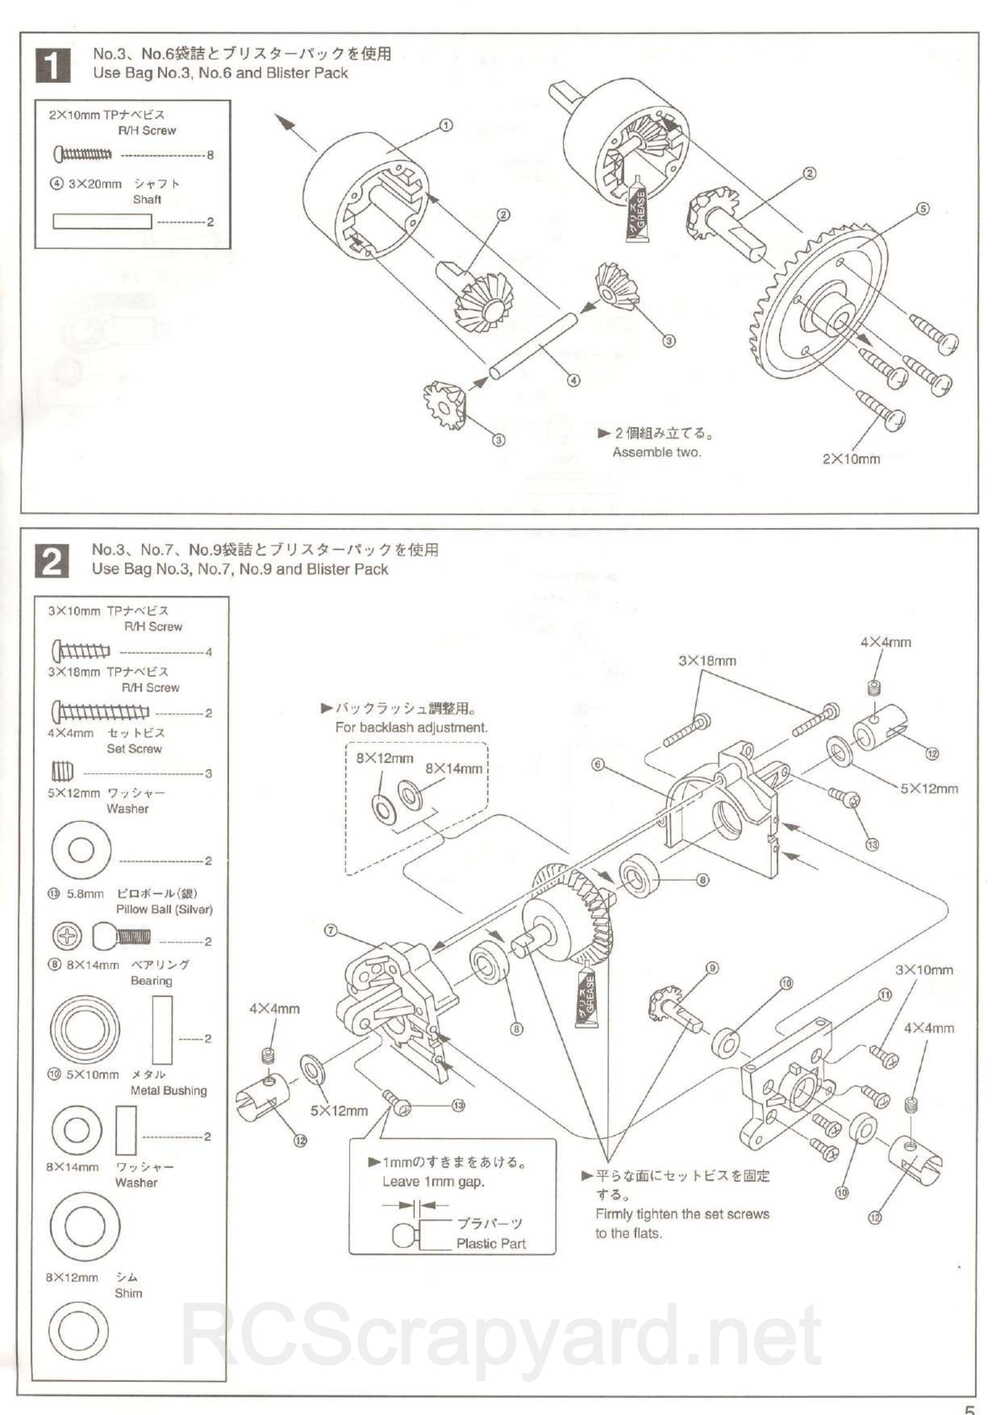 Kyosho - 31345 - Inferno 10 - Manual - Page 05